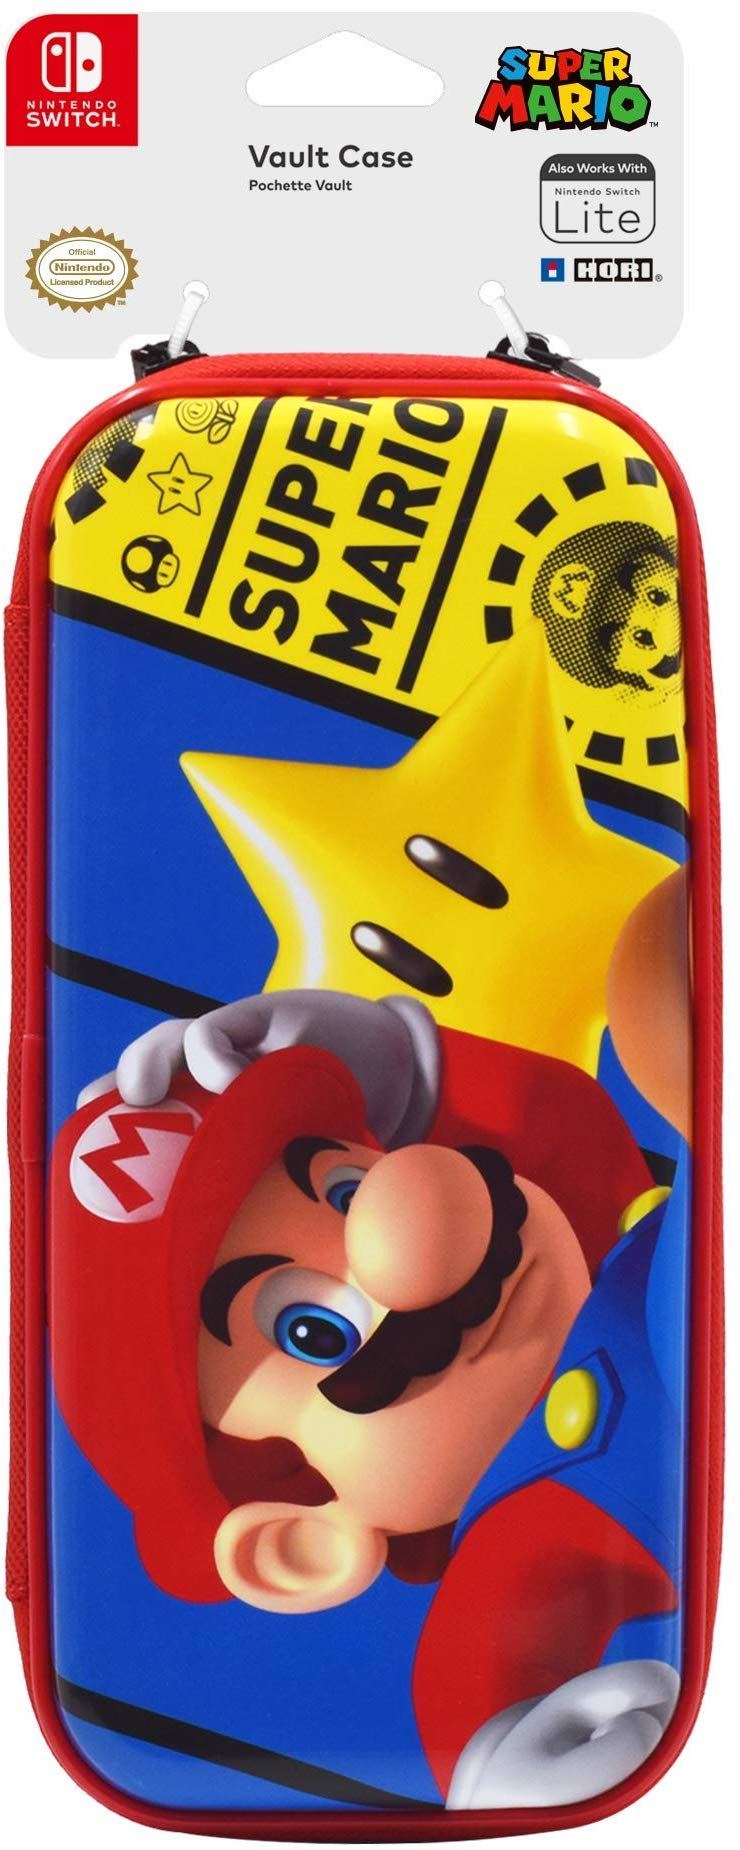 Vault Case For Nintendo Switch Nintendo Switch Lite Super Mario